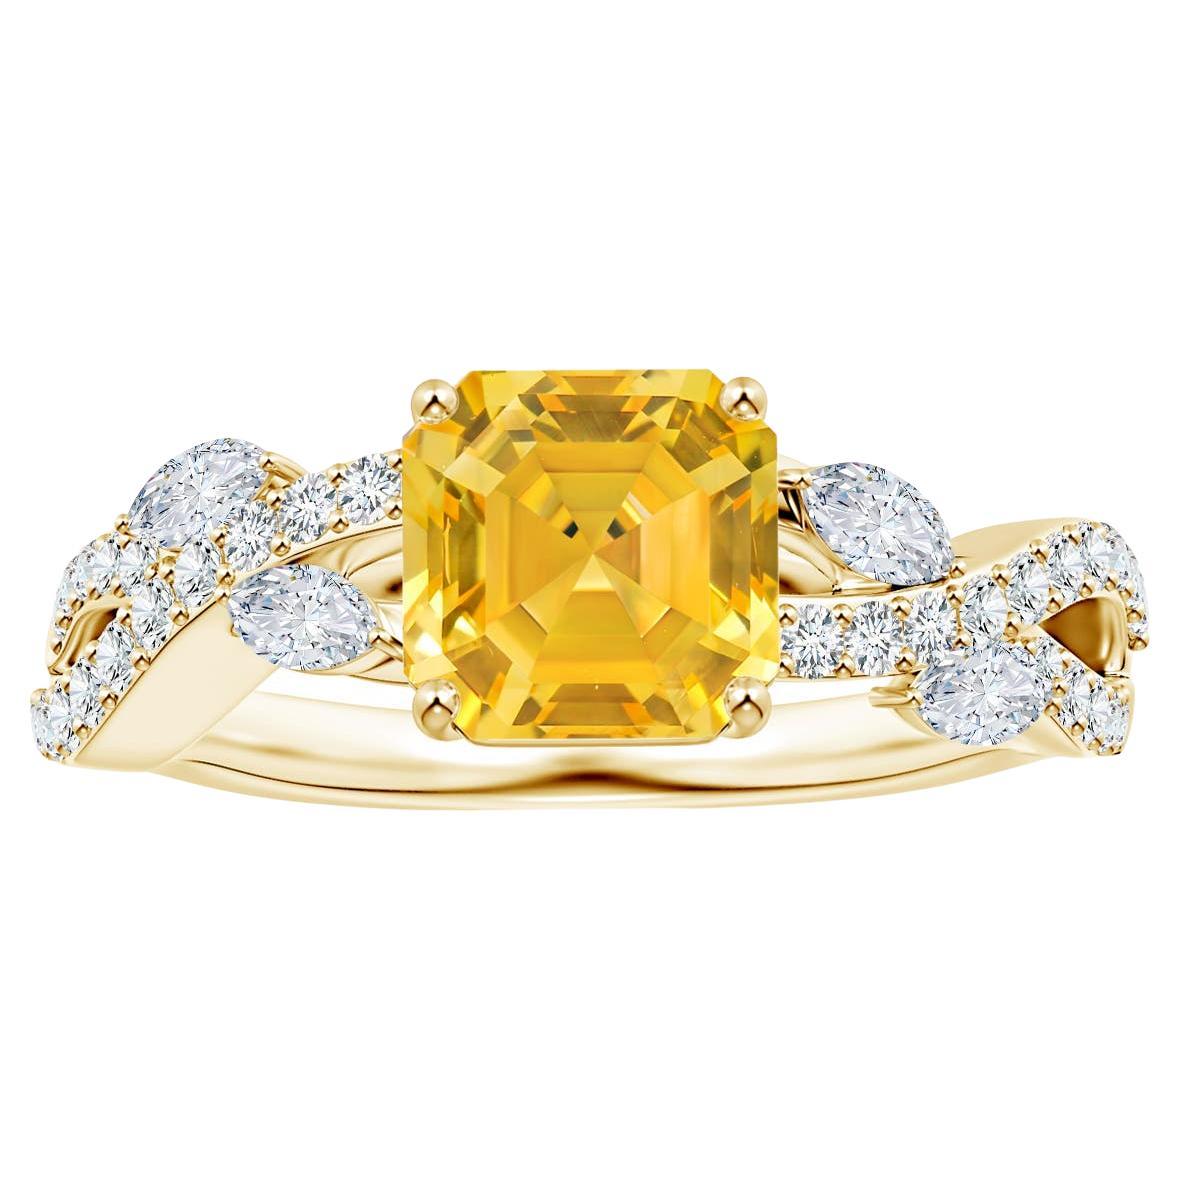 For Sale:  Angara Gia Certified Emerald-Cut Yellow Sapphire Diamond Ring in Yellow Gold